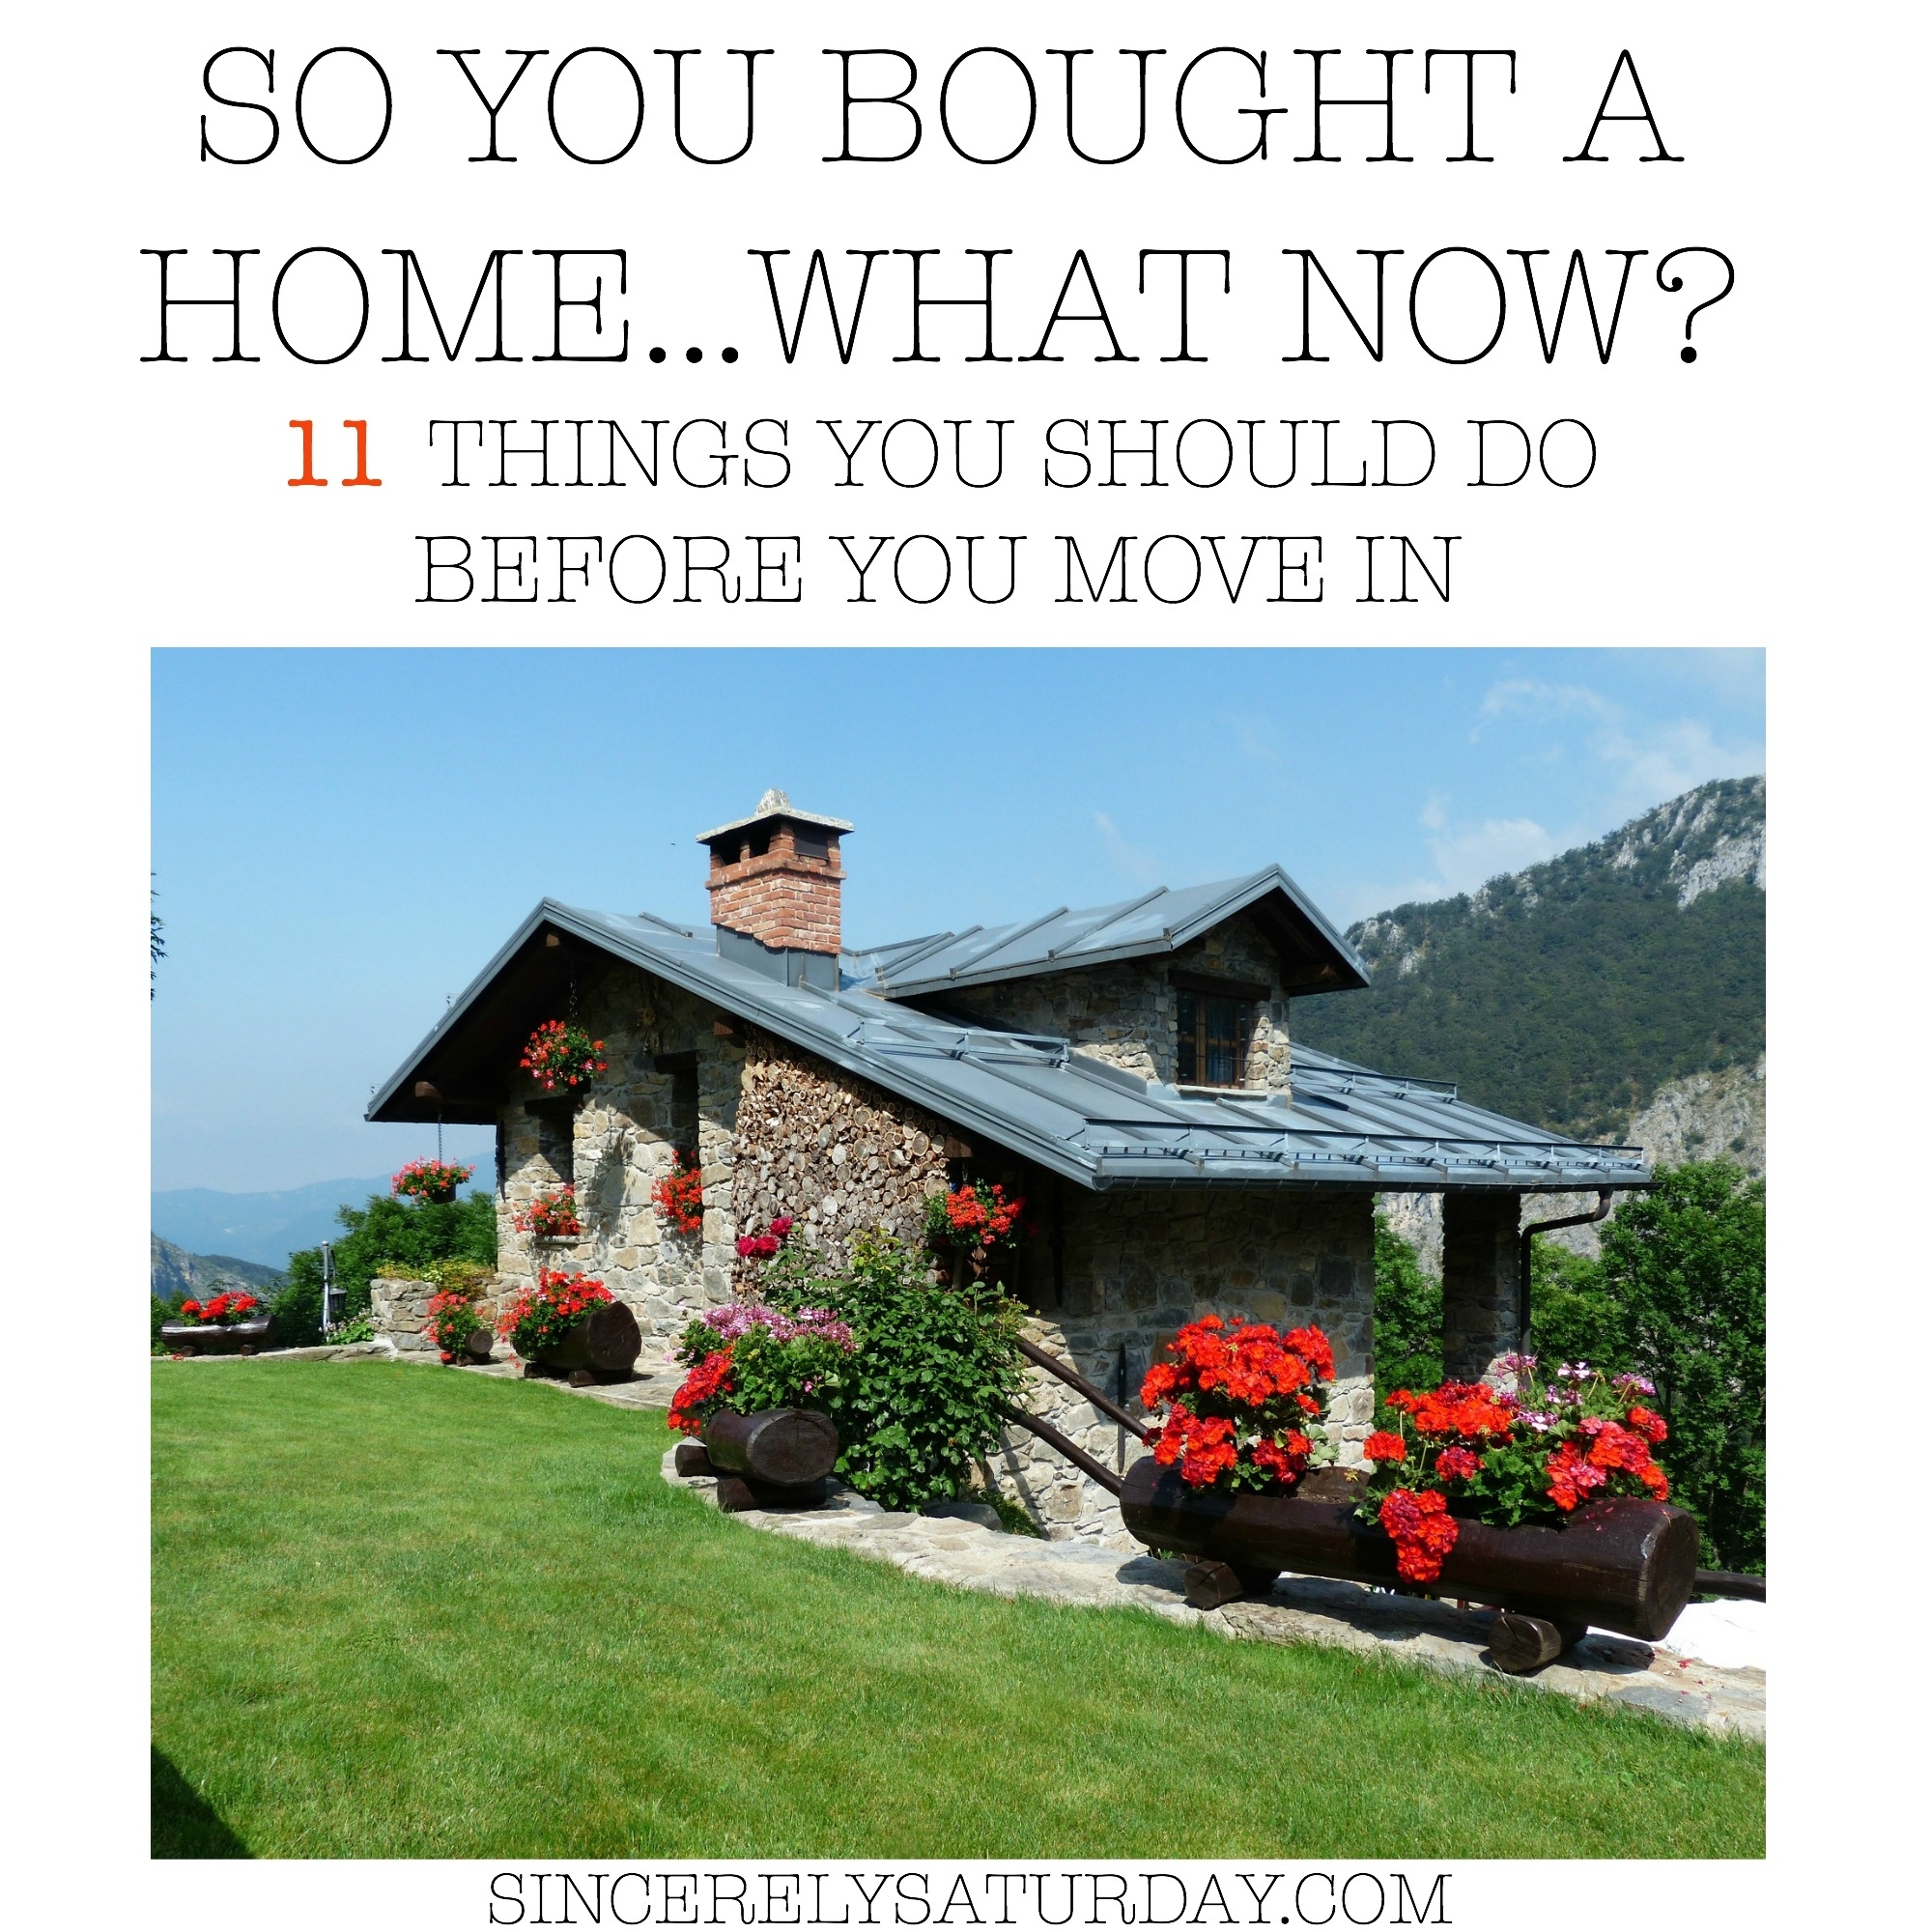 So you bought a home